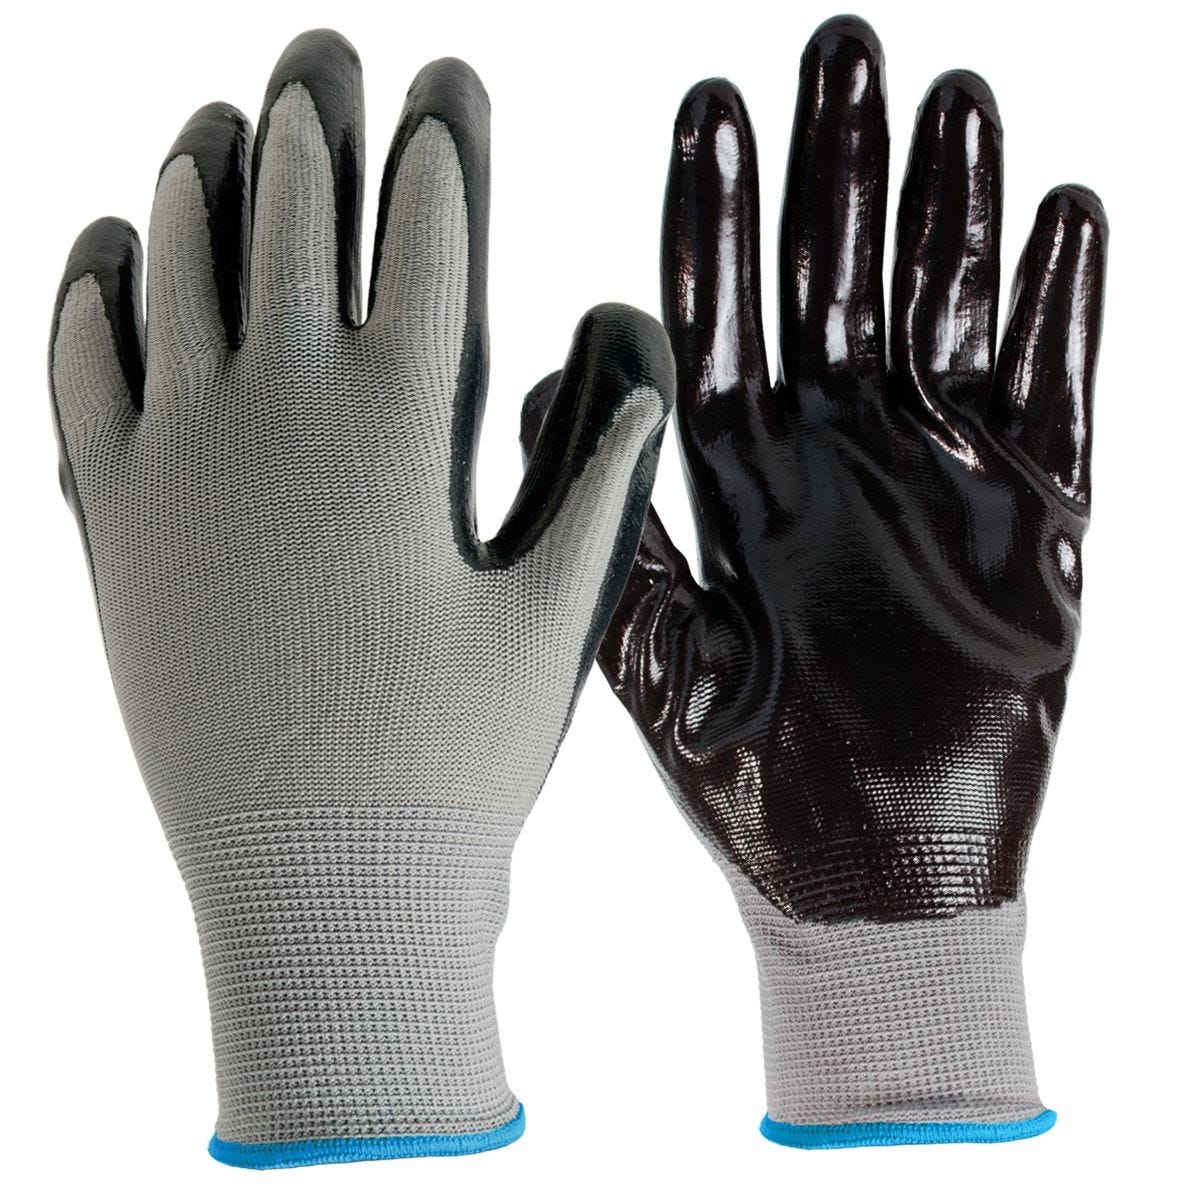 True Grip Nitrile-Coated Gloves | Rockler Woodworking and Hardware